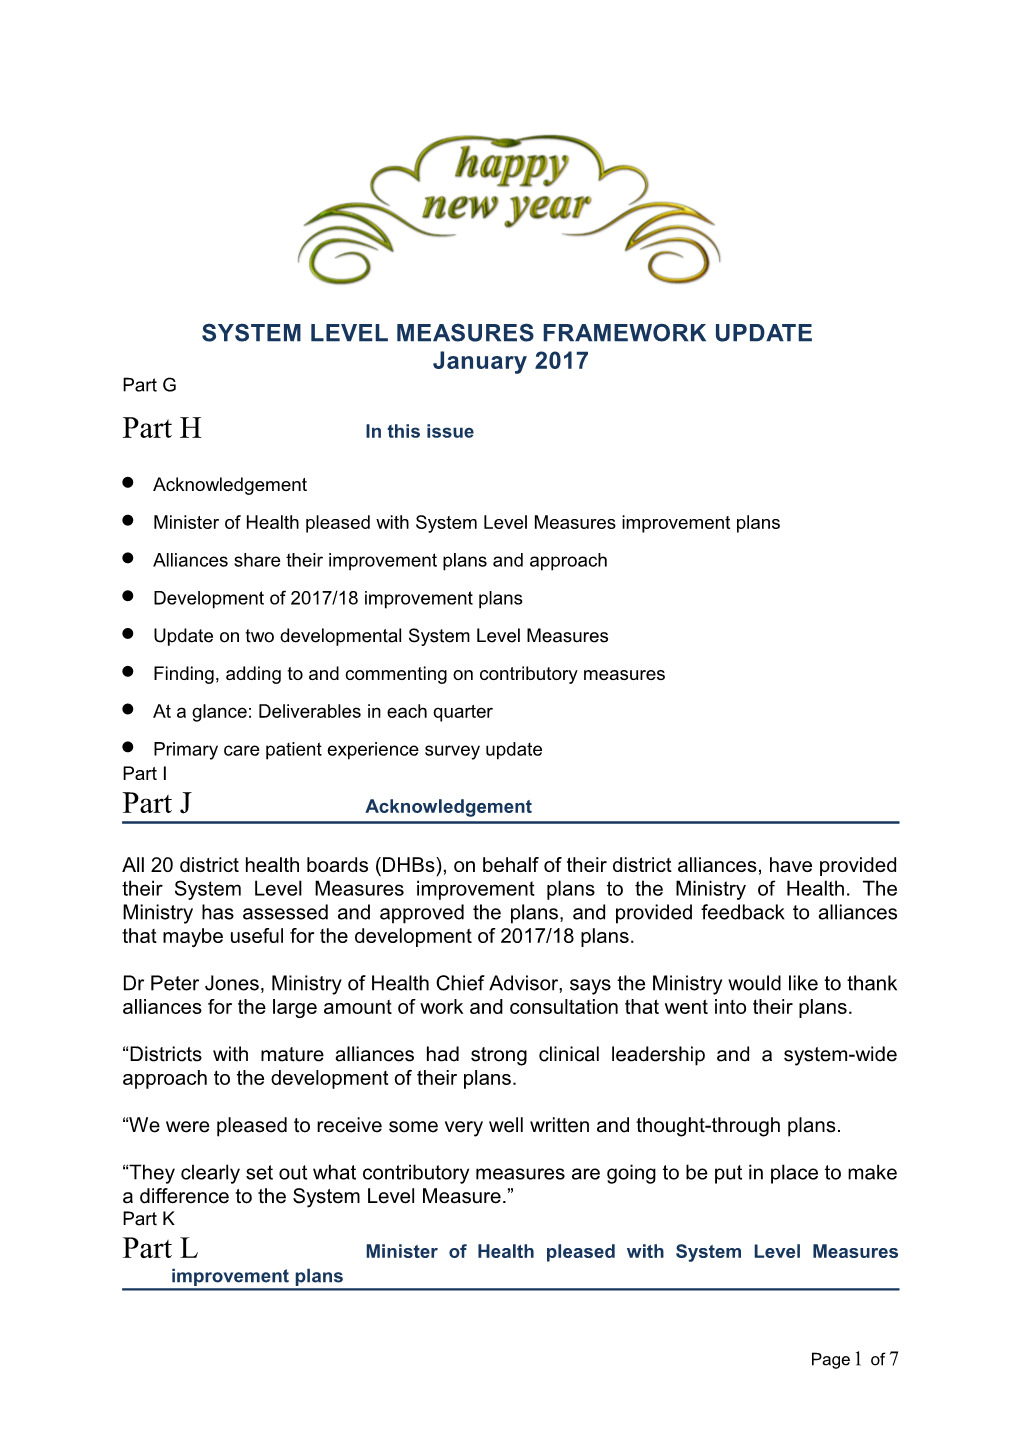 System Level Measures Framework Update: January 2017